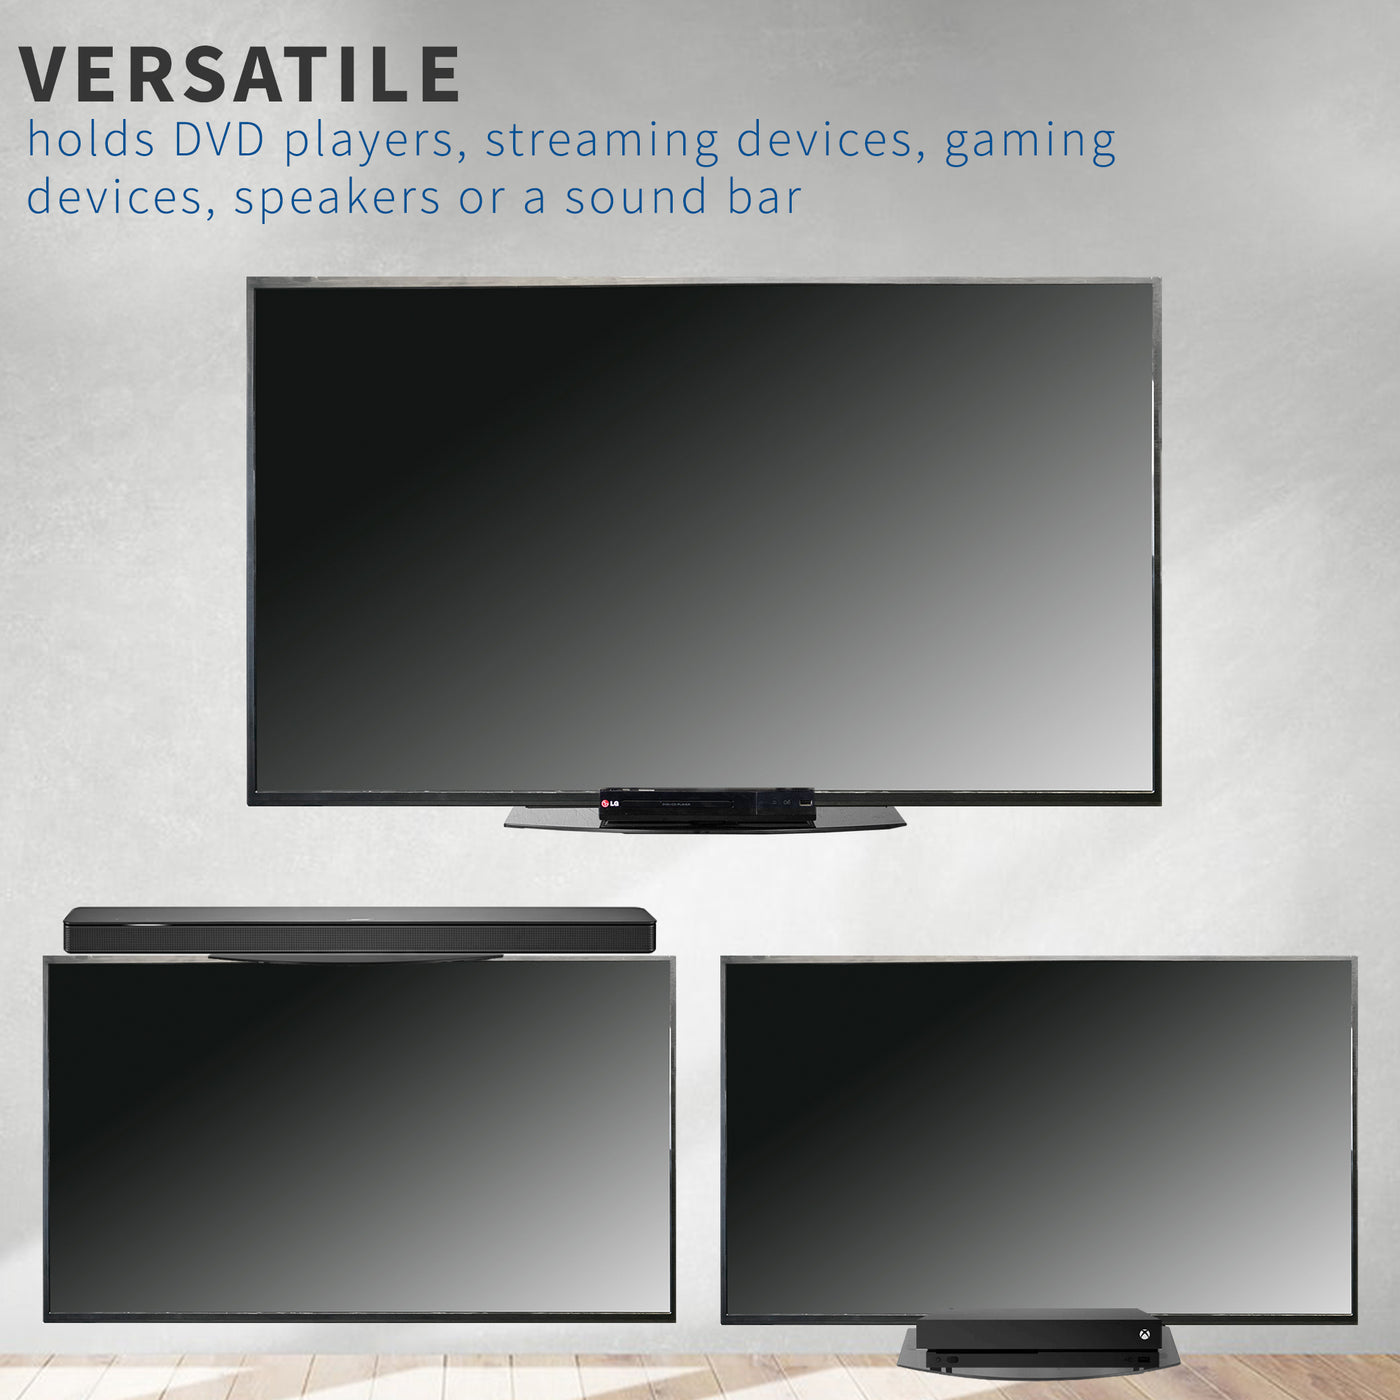 Versatile VESA-compatible shelf elevates gaming stations, streaming devices, soundbars, speakers, and more.